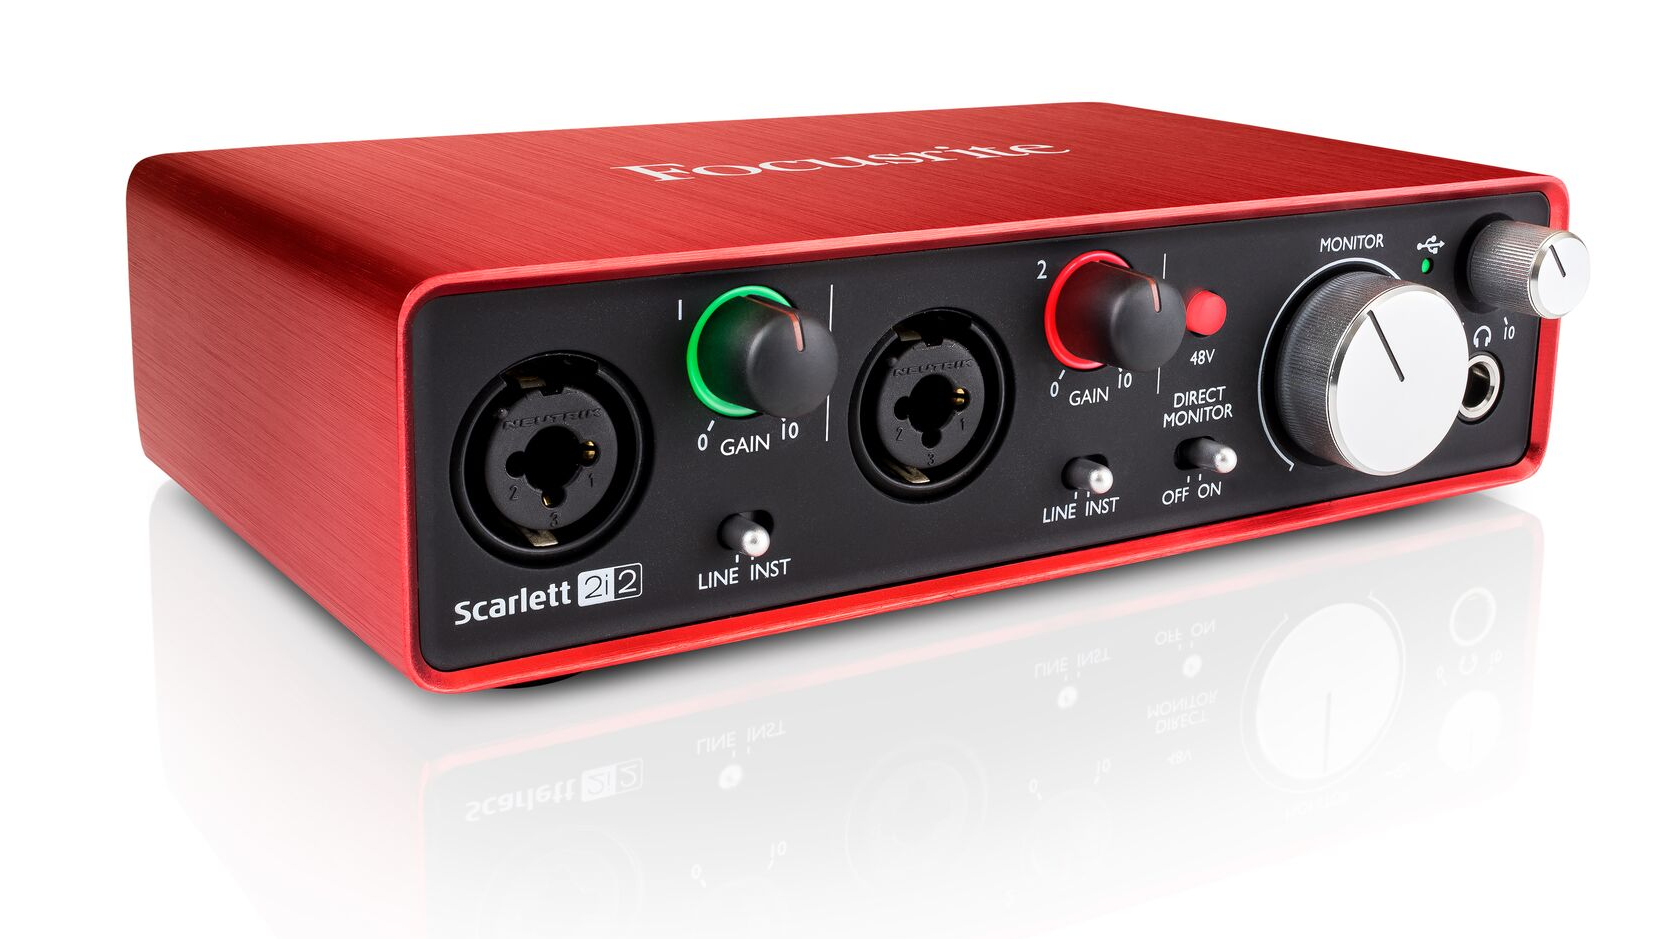 Focusrite Scarlett 2i2 2x2 USB Audio Interface, 2nd Generation